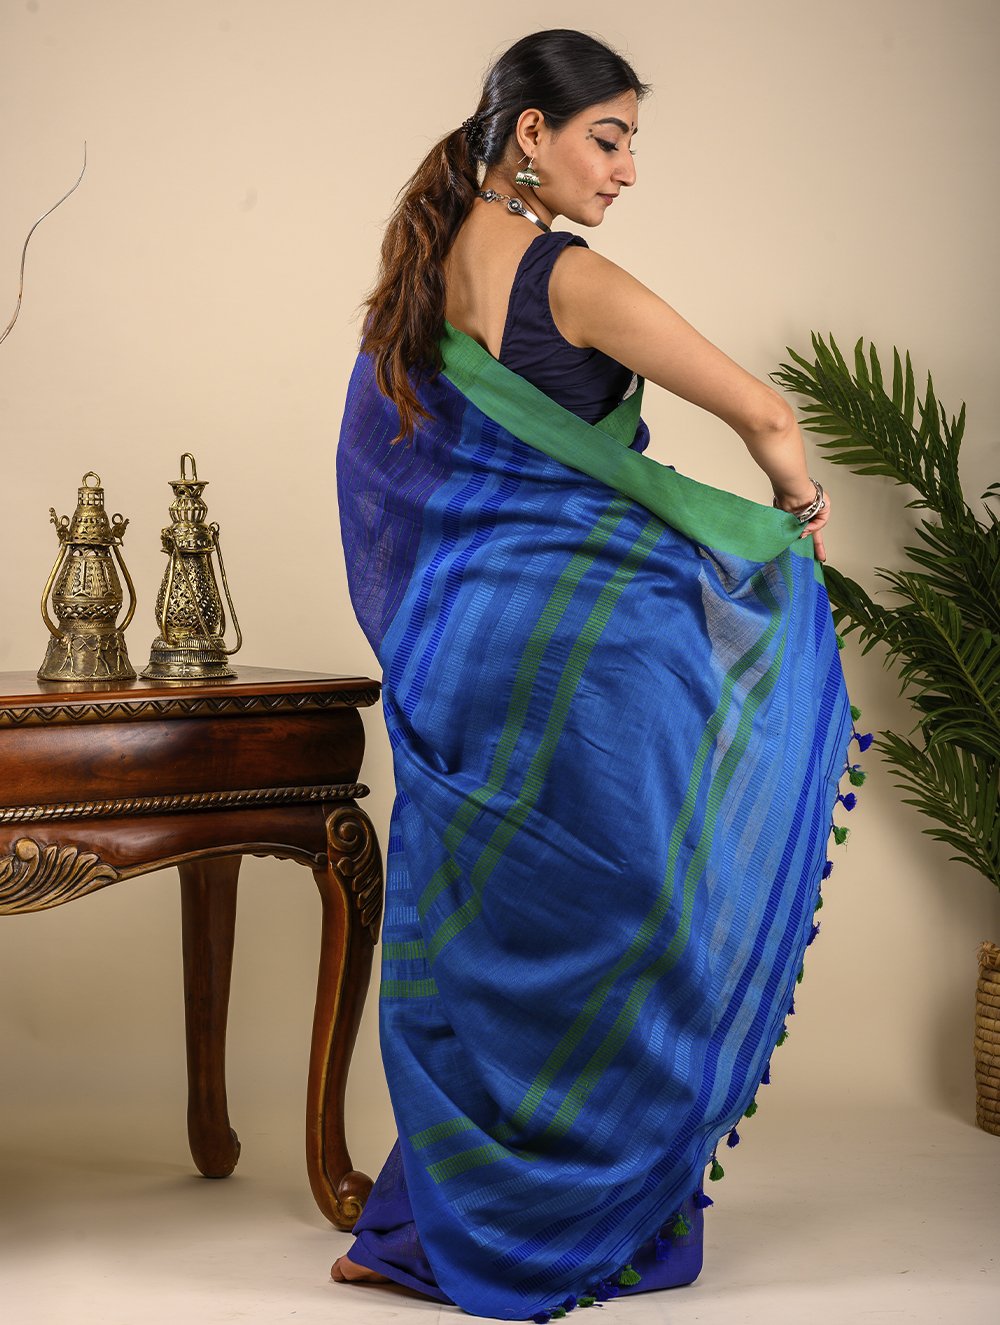 Sitara Kantha cotton saree - Phagun Pratima Kantha cotton saree